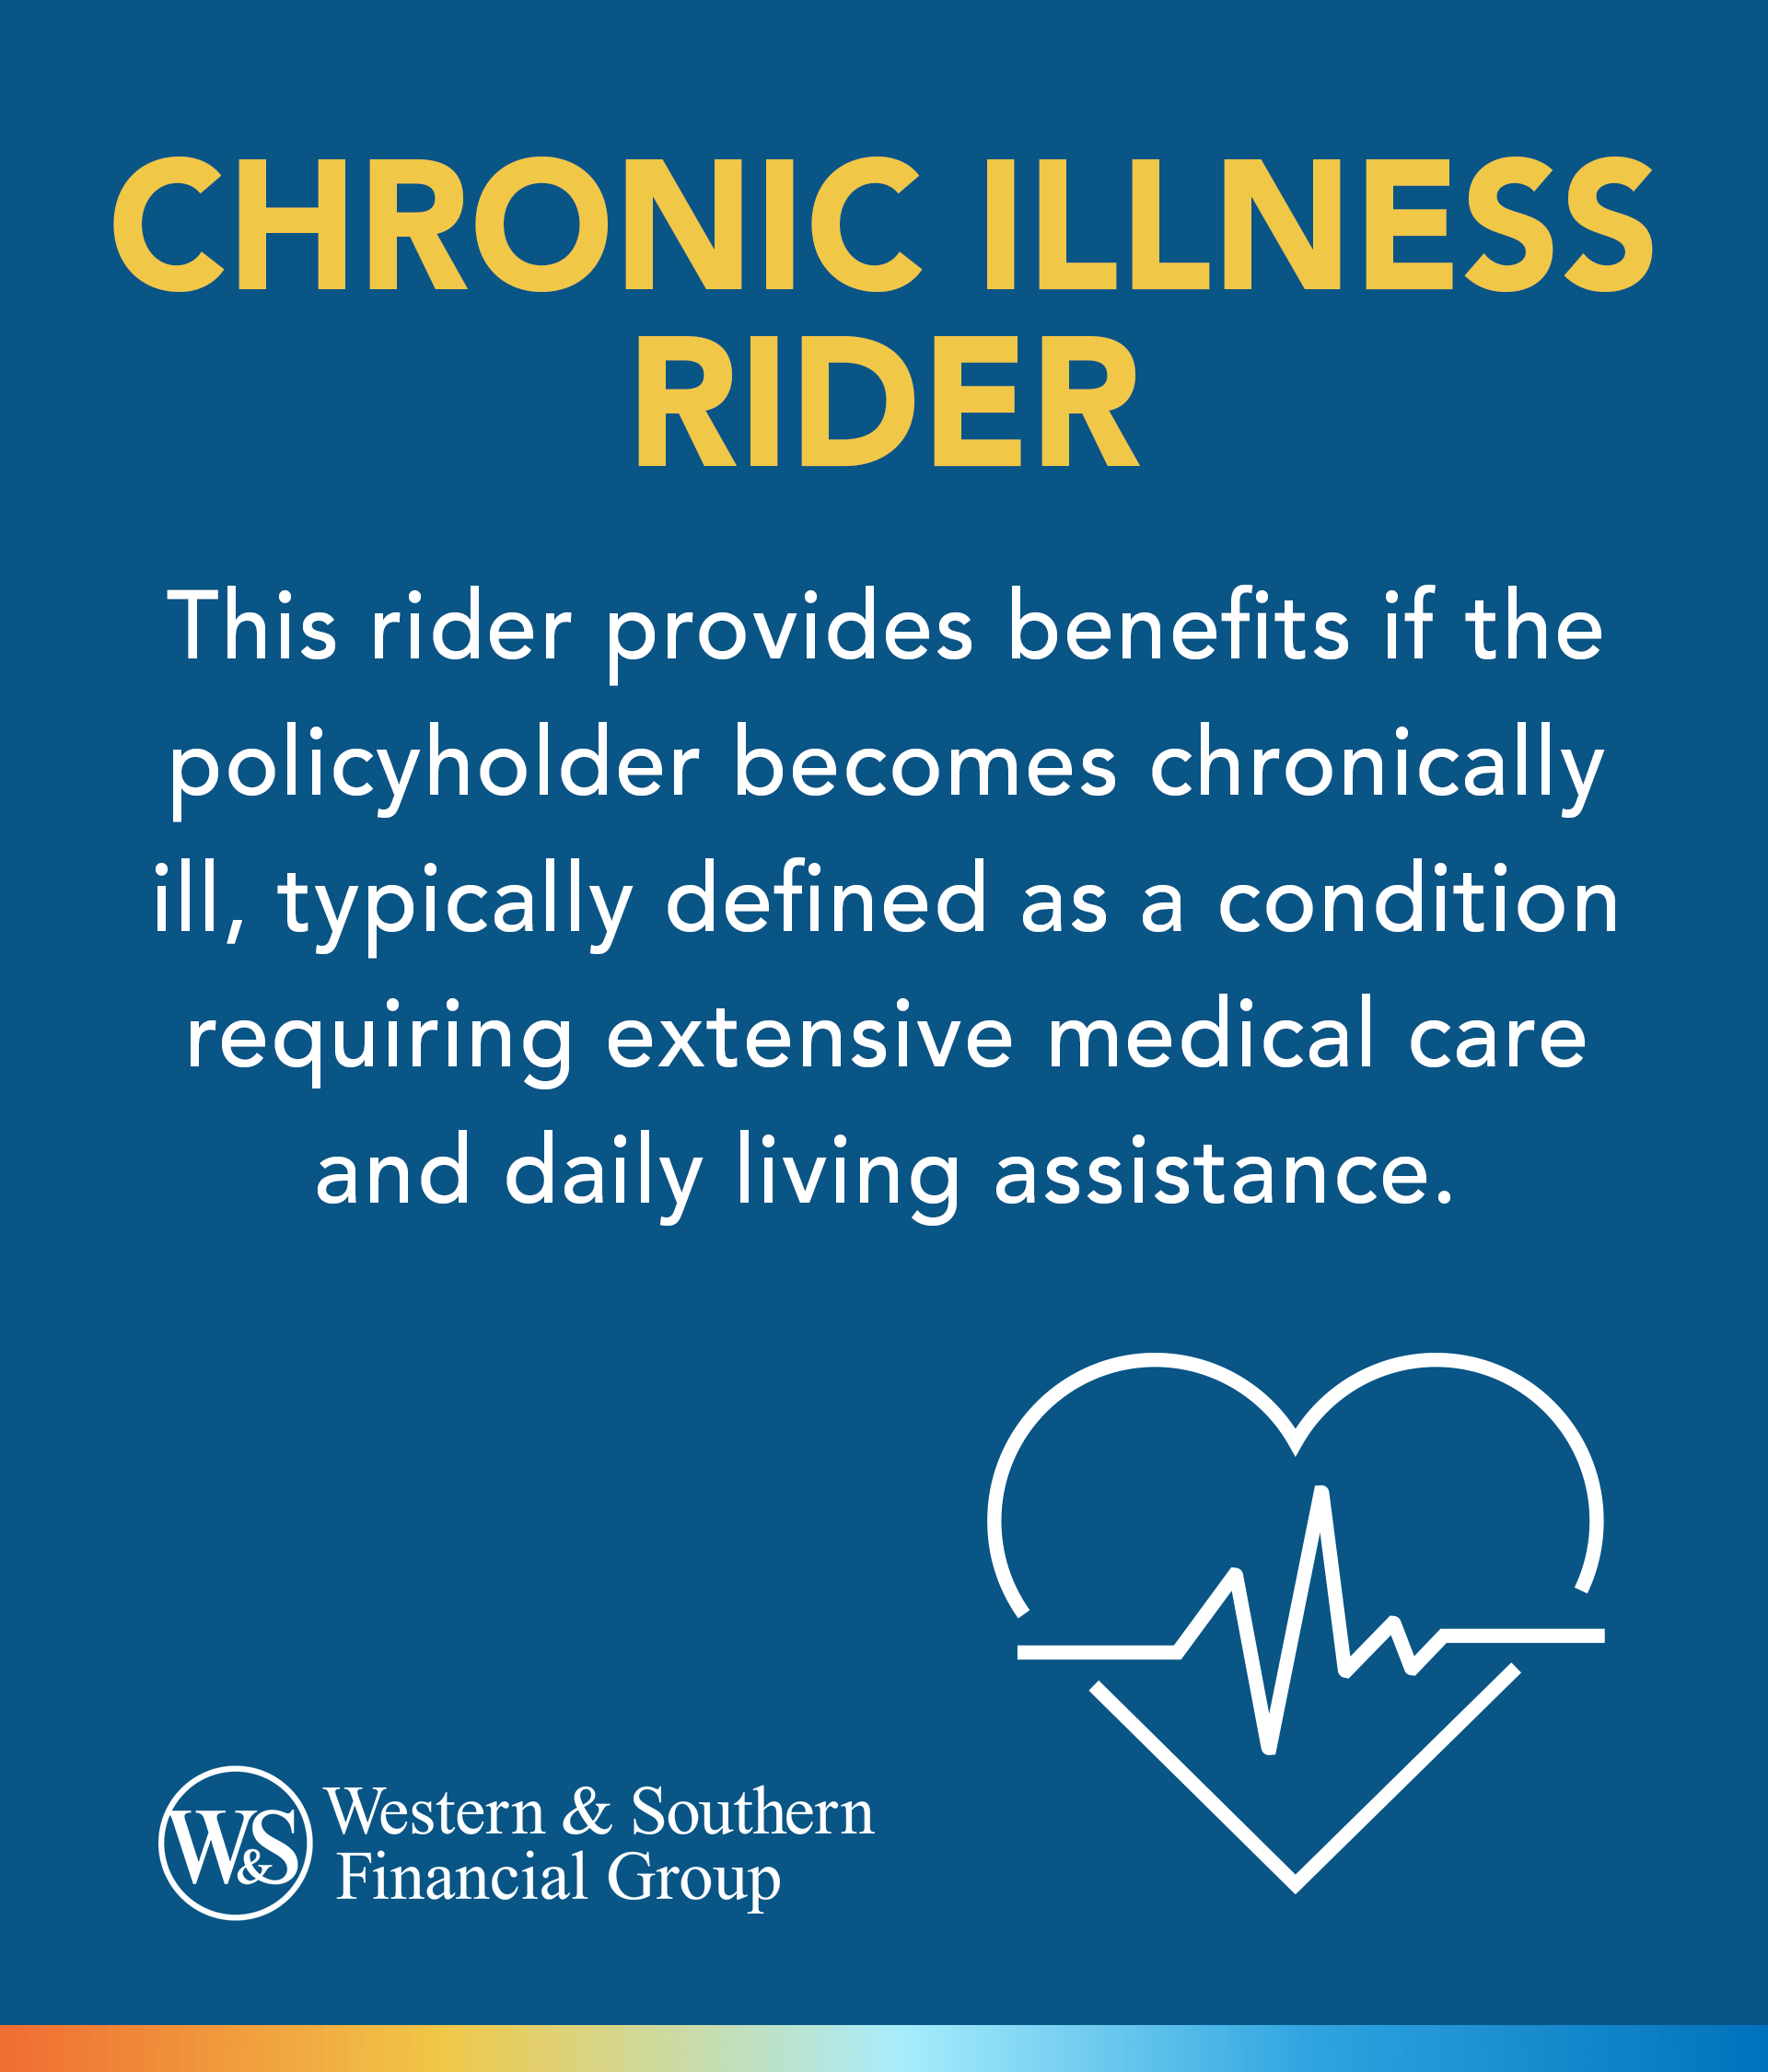 Chronic Illness Rider definition